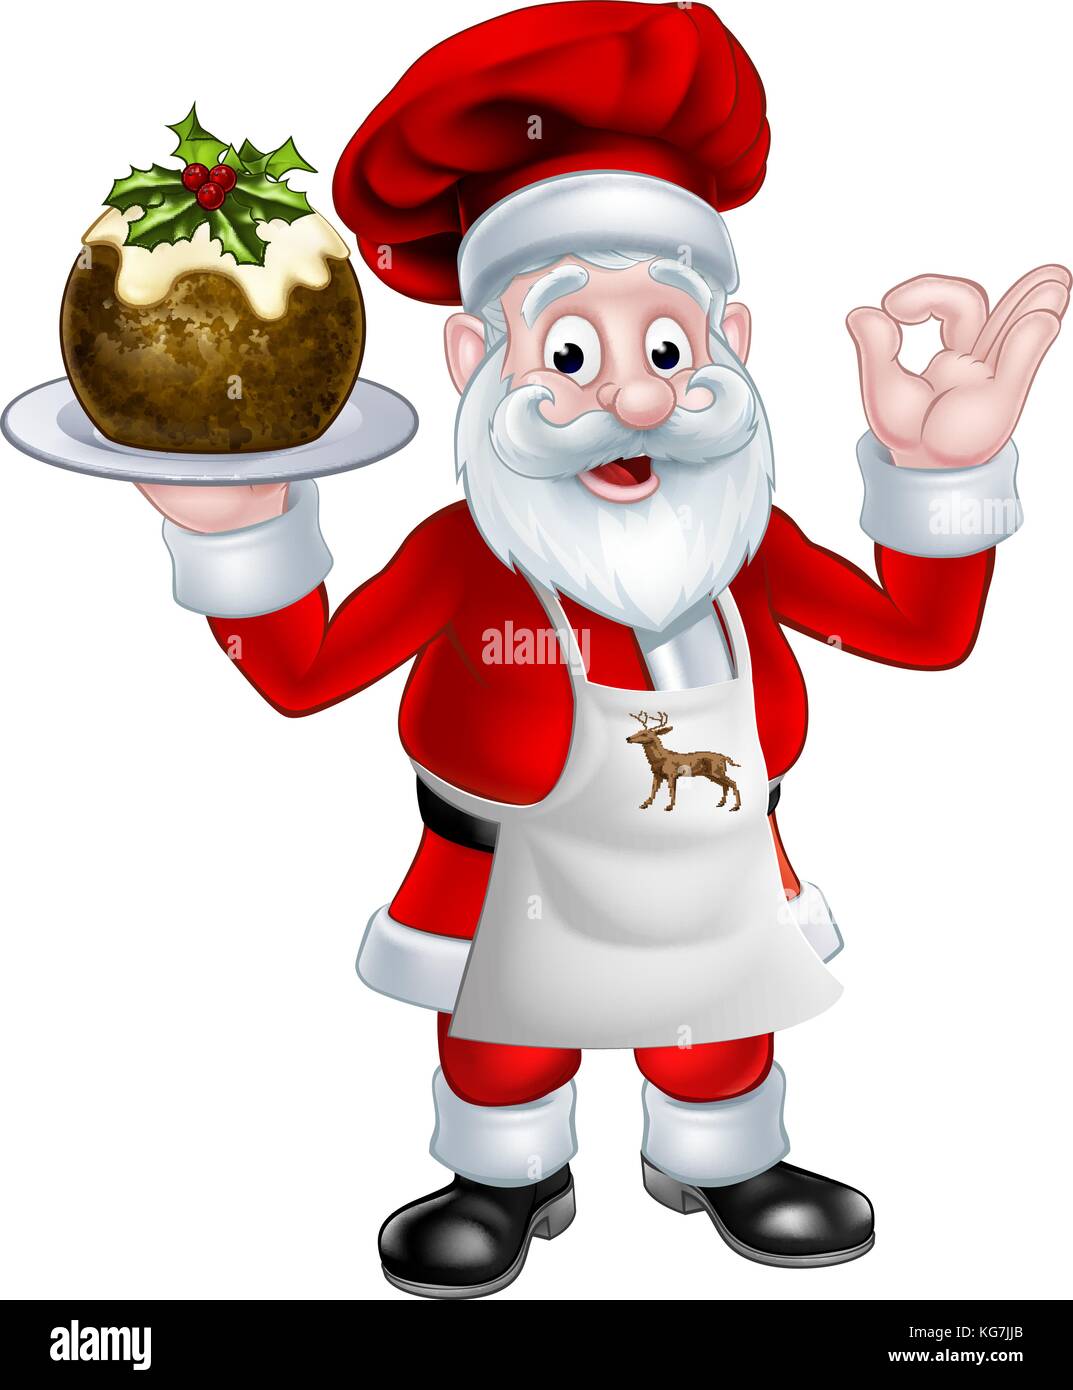 Santa Chef Holding a Christmas Pudding Stock Vector